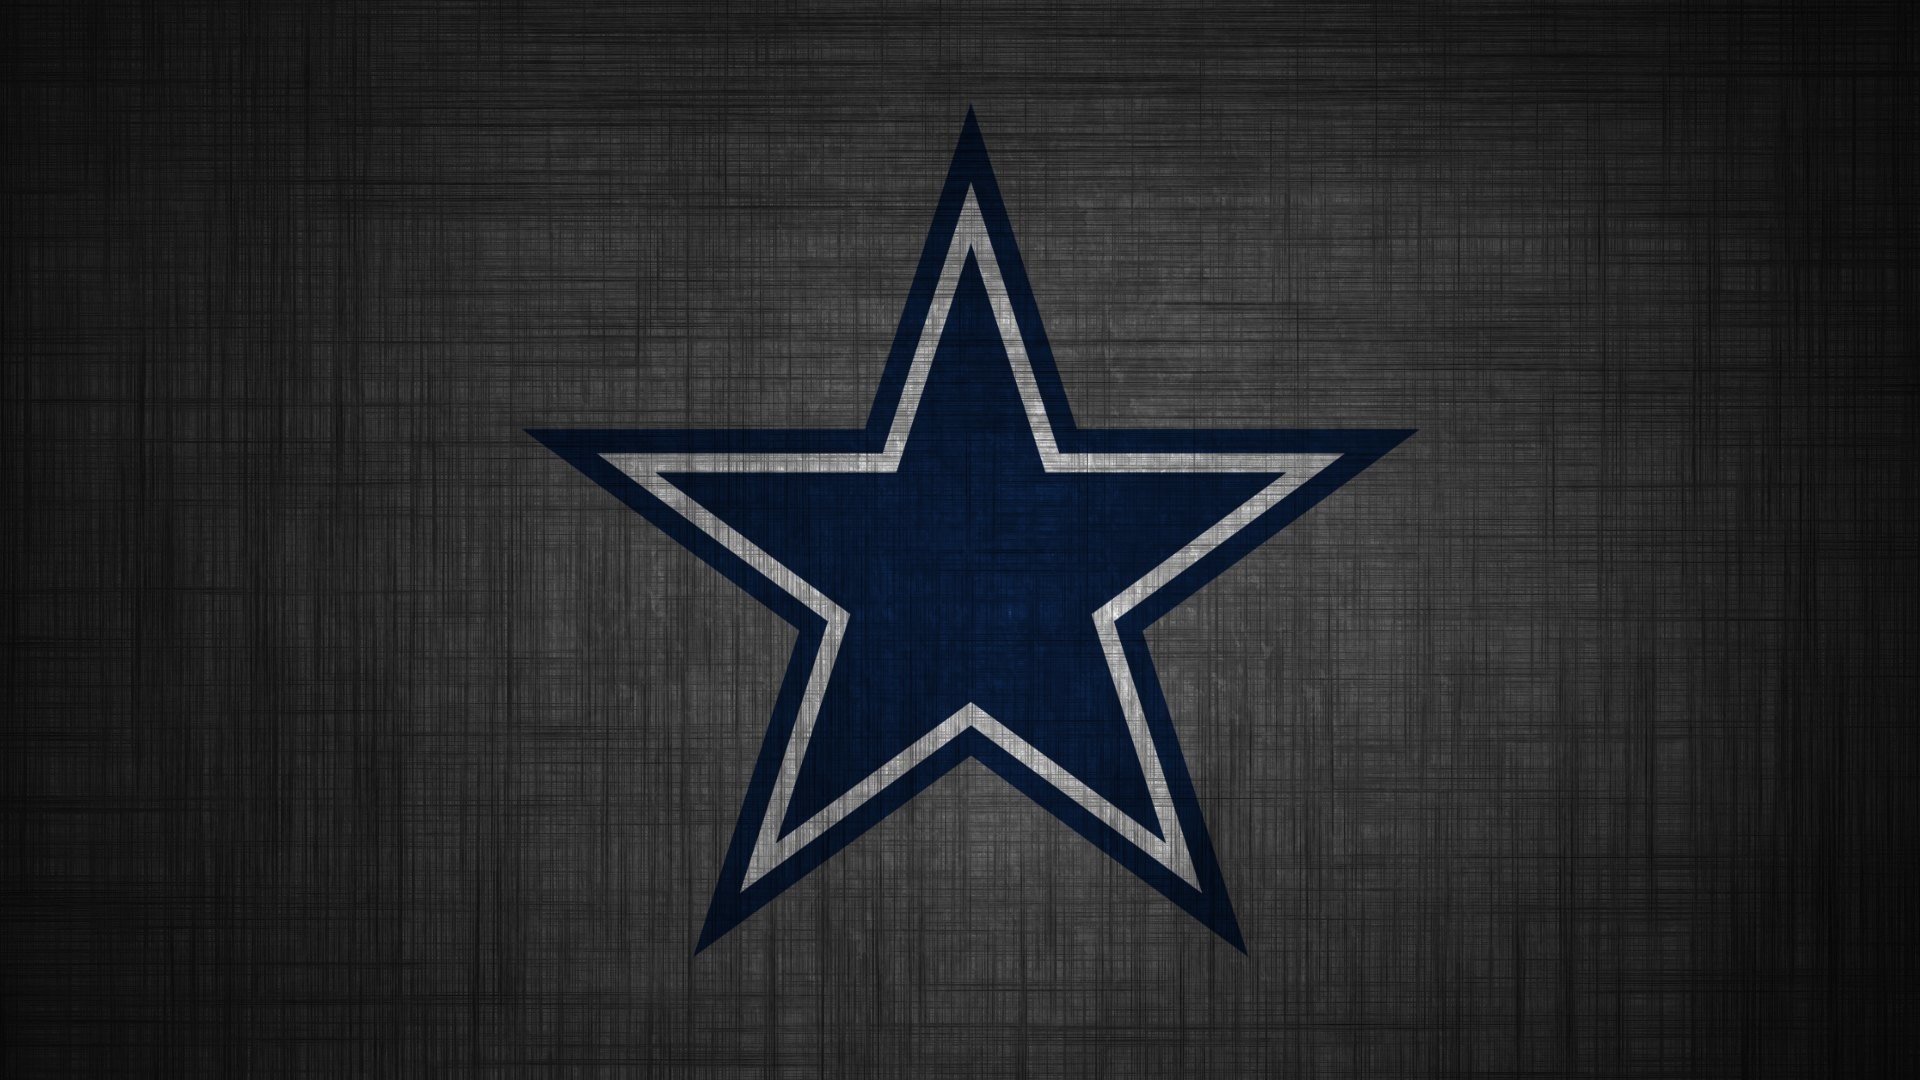 Dallas Cowboys Puter Wallpaper Image